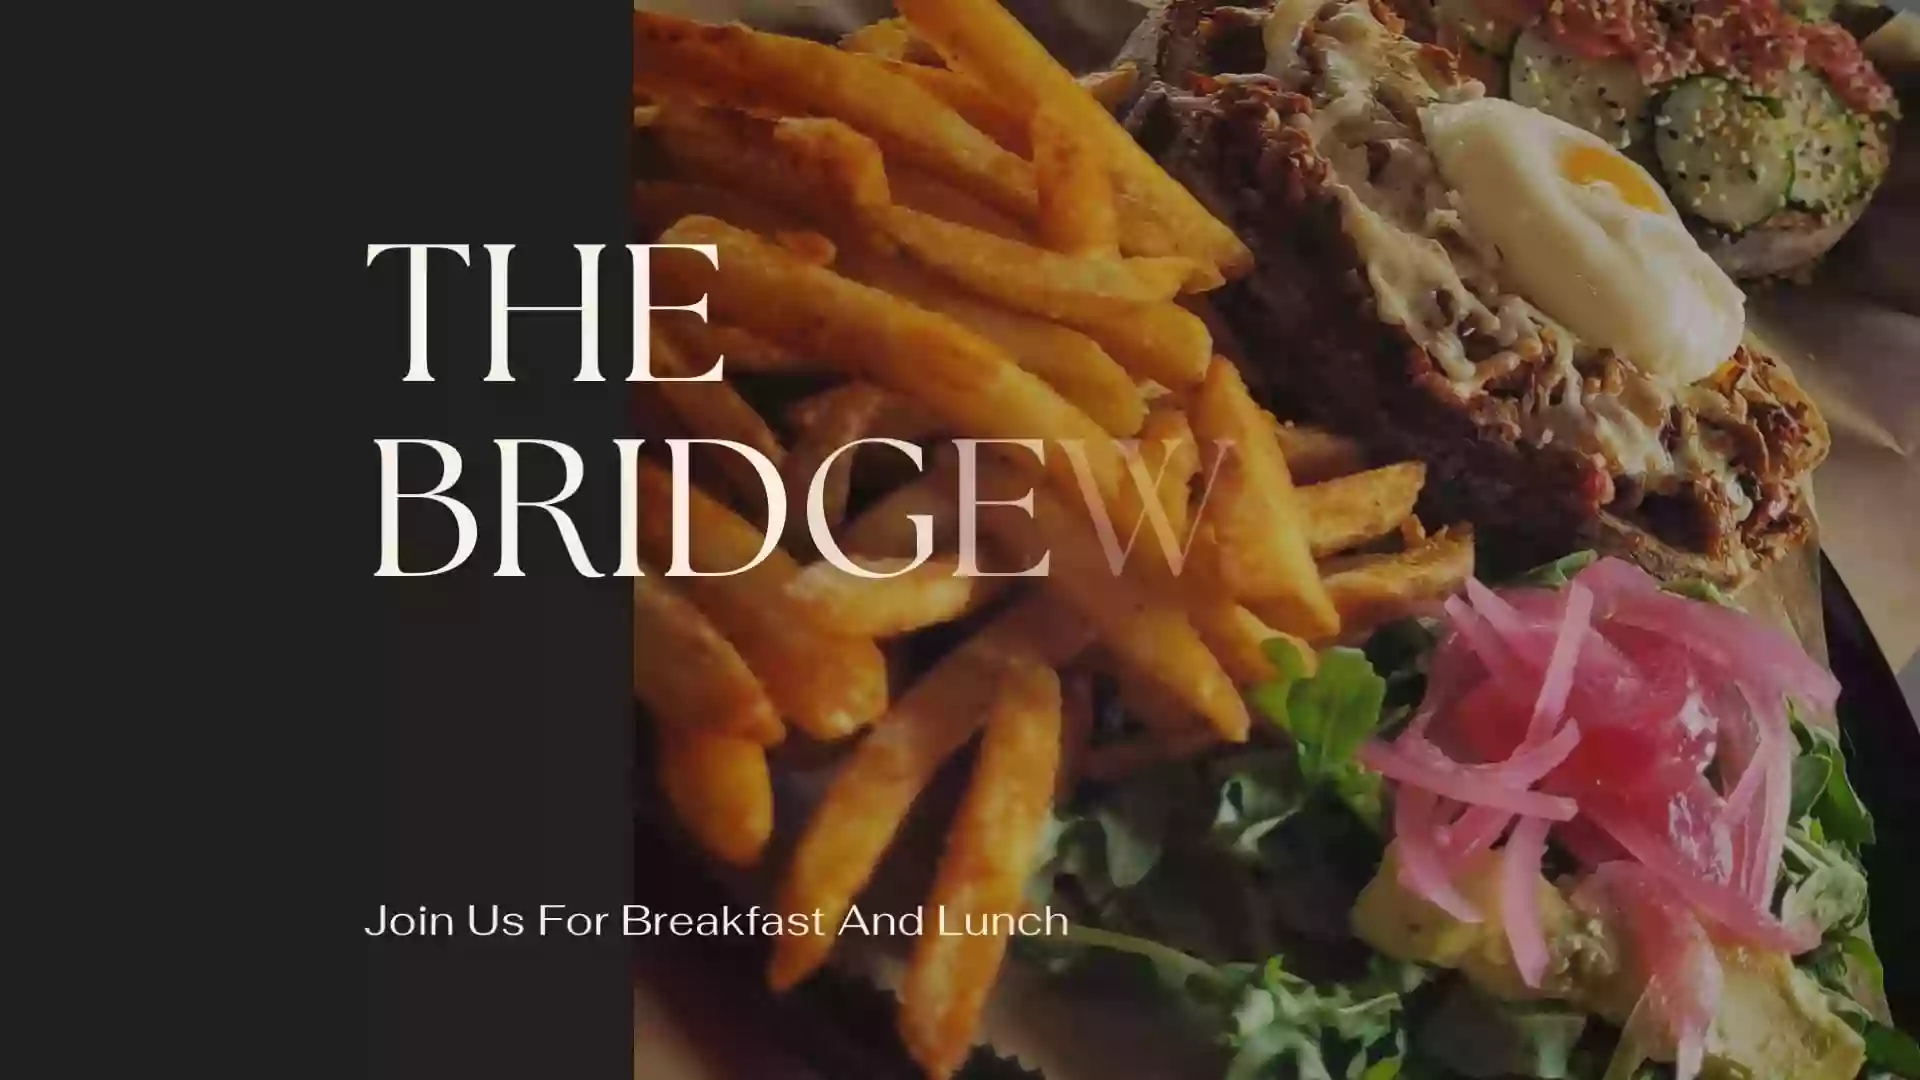 The Bridgewater Cafe